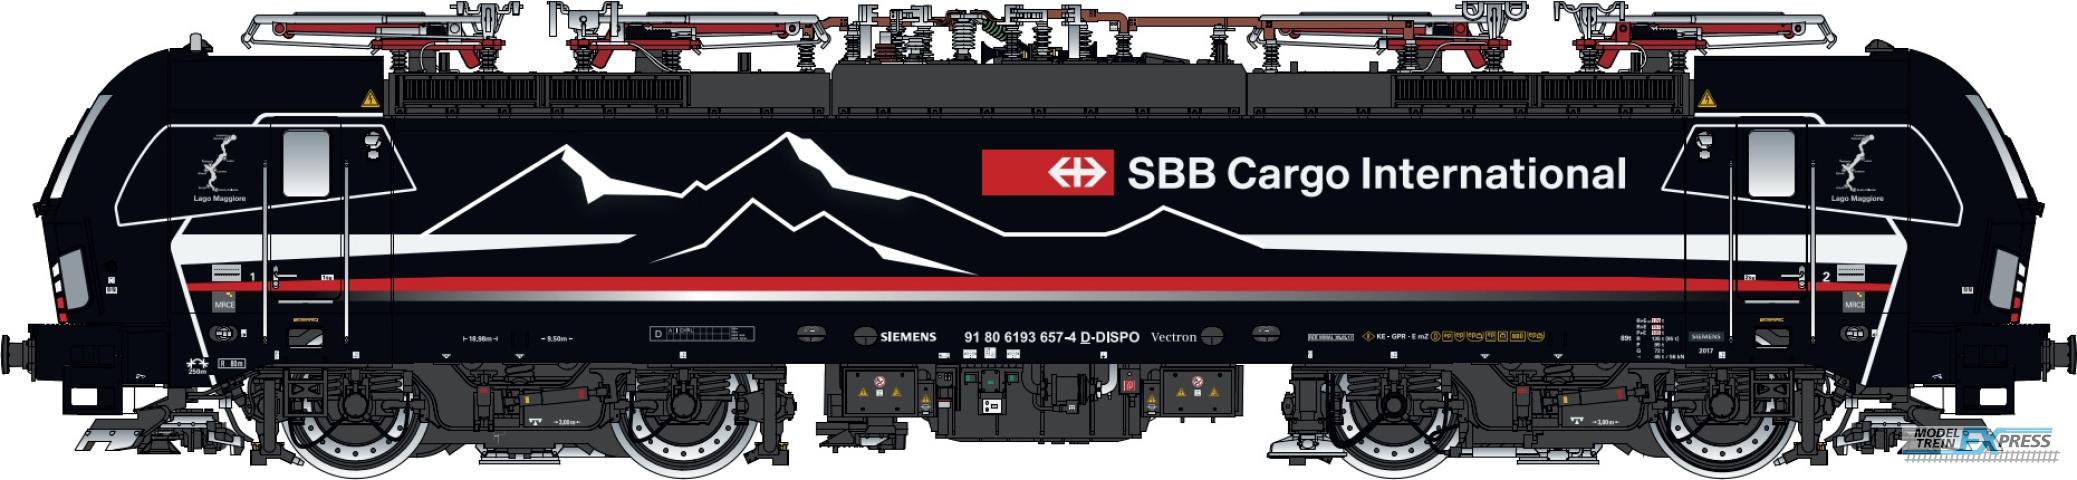 LS Models 17618 SBB Cargo/Shadowpiercer, 4 pantographs, Ep. VI (2019) 91 80 6193 657-4 D-DISPO  /  Ep. VI  /  ---  /  HO  /  AC  /  1 P.